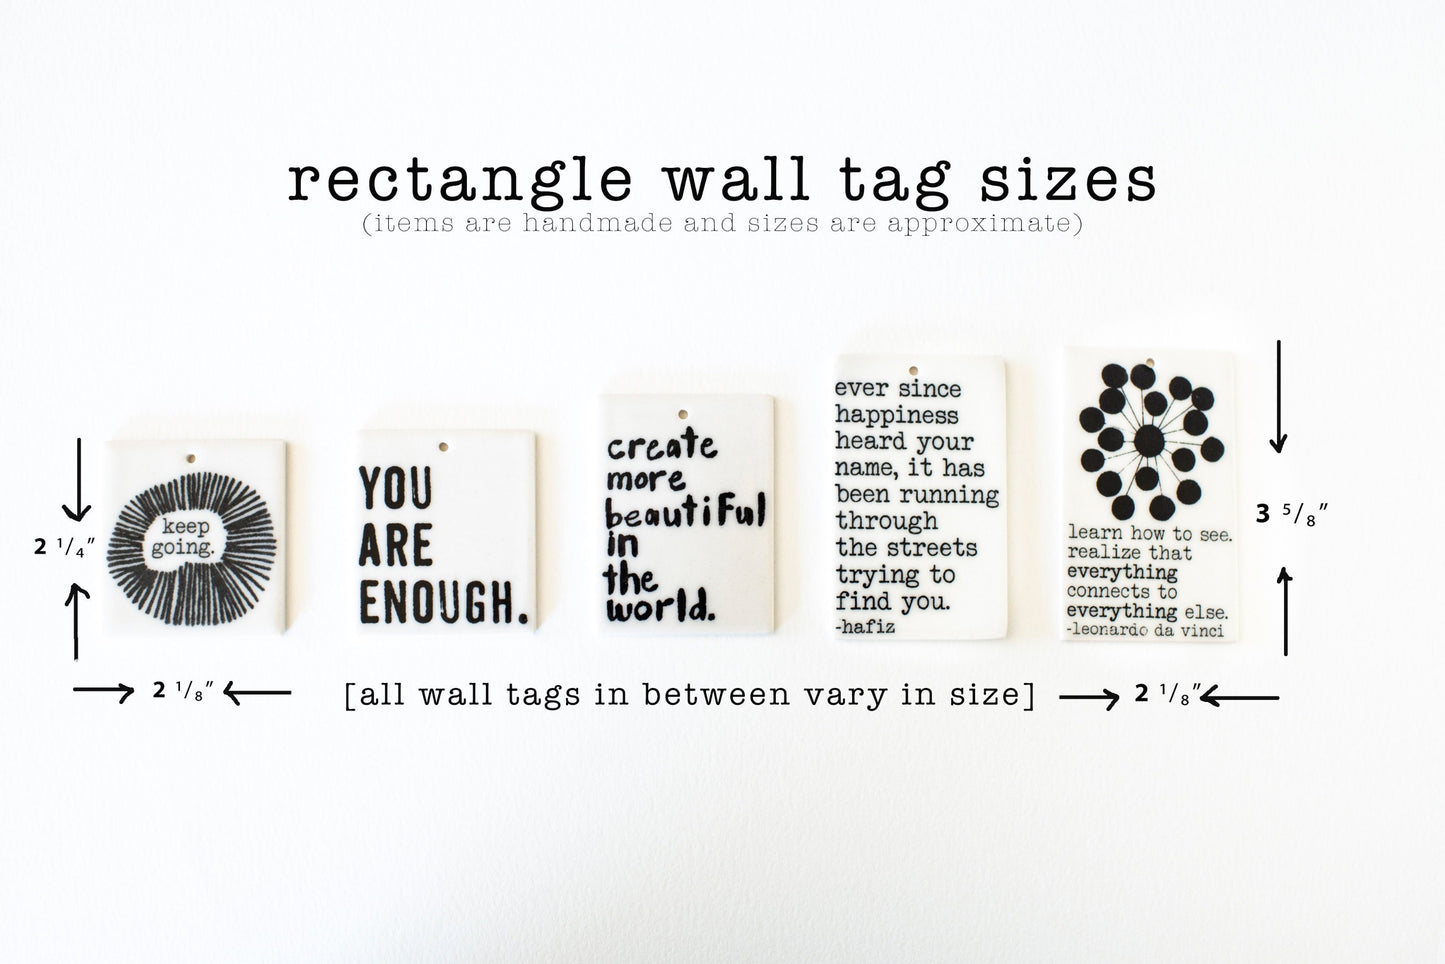 joseph campbell quote | ceramic wall tag | ceramic wall tile | ceramic wall art | screenprinted ceramics | joy | pain | bereavement | grief